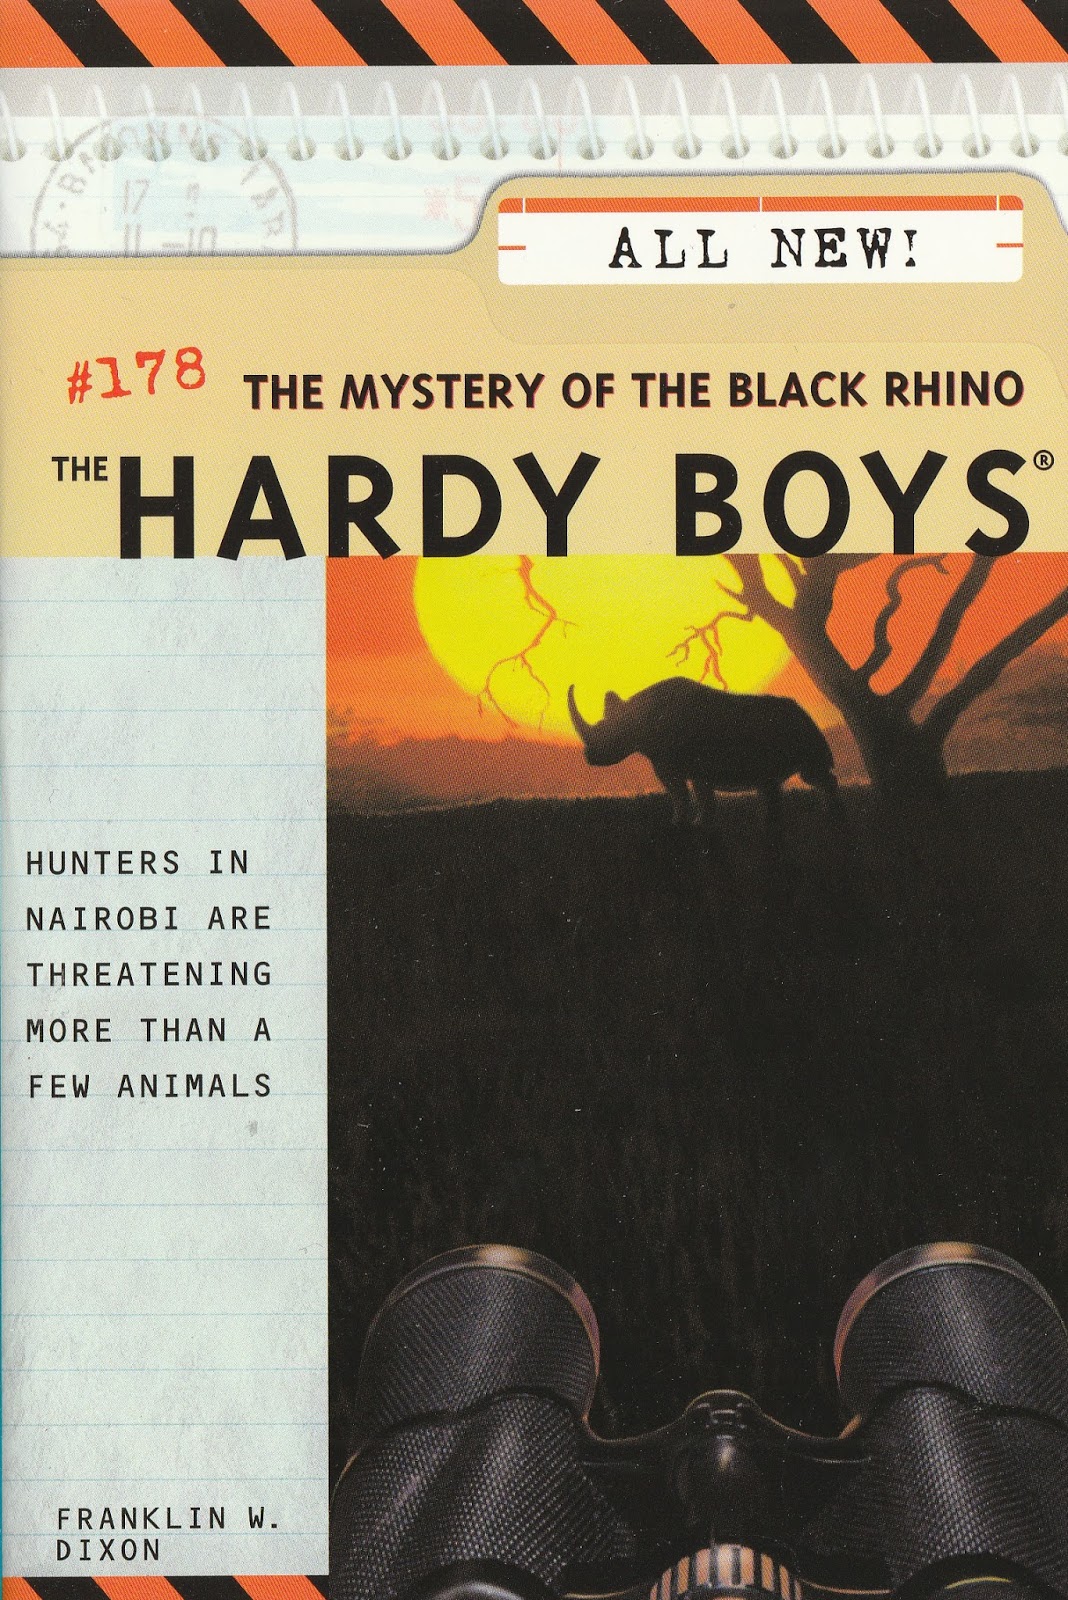 Double jeopardy hardy boys book report